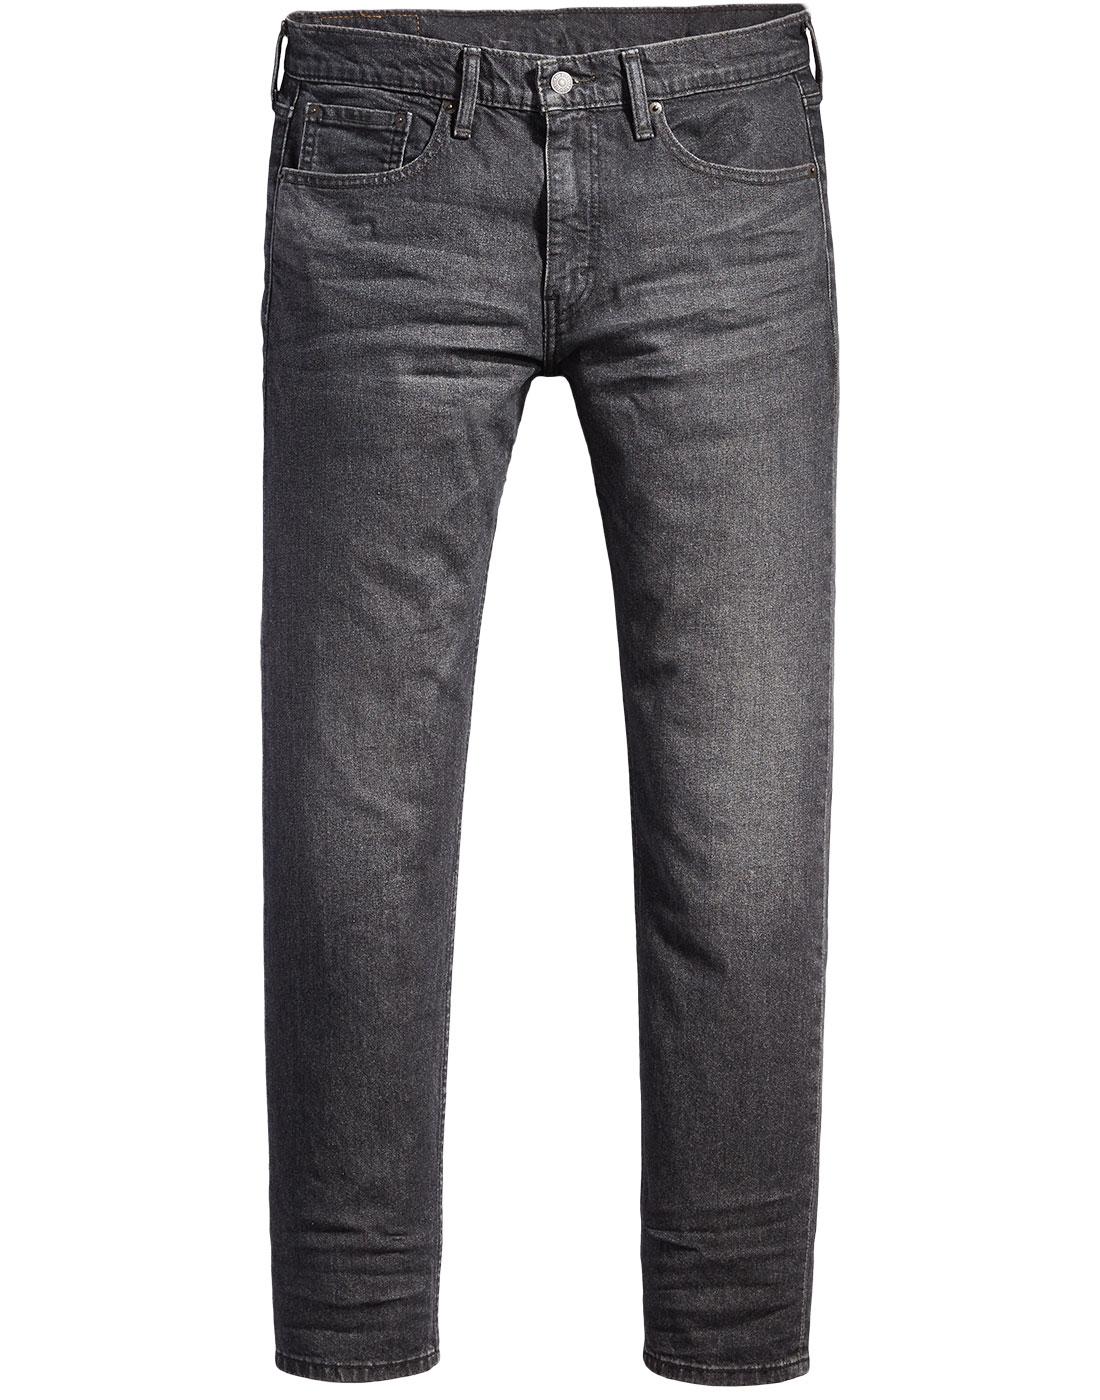 LEVI'S 502 Regular Tapered Mod Denim Jeans KANSAS